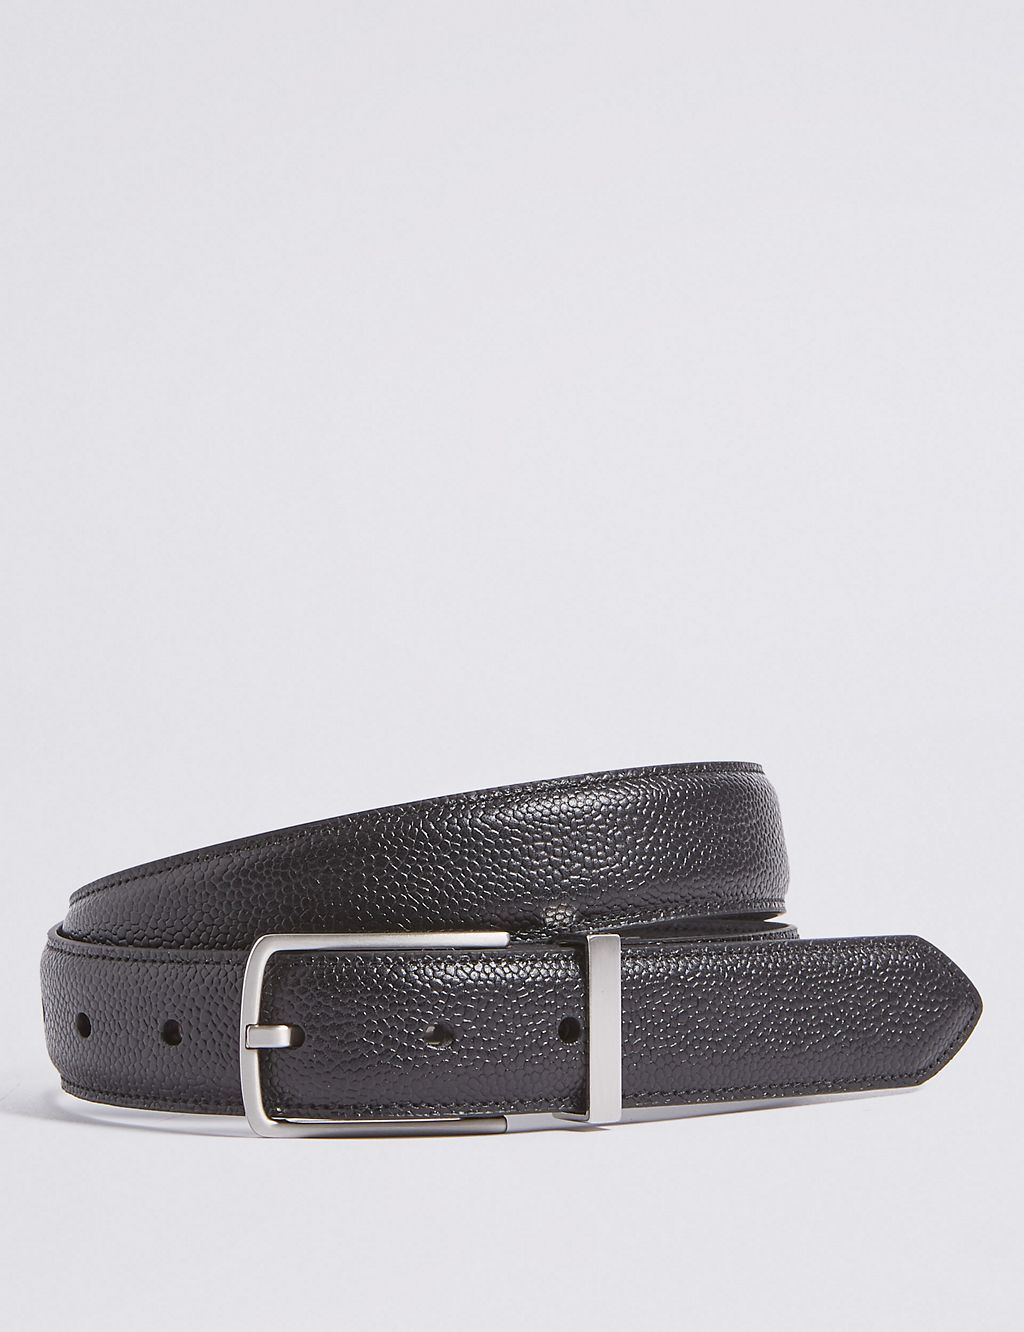 Leather Rectangular Buckle Smart Belt 3 of 3